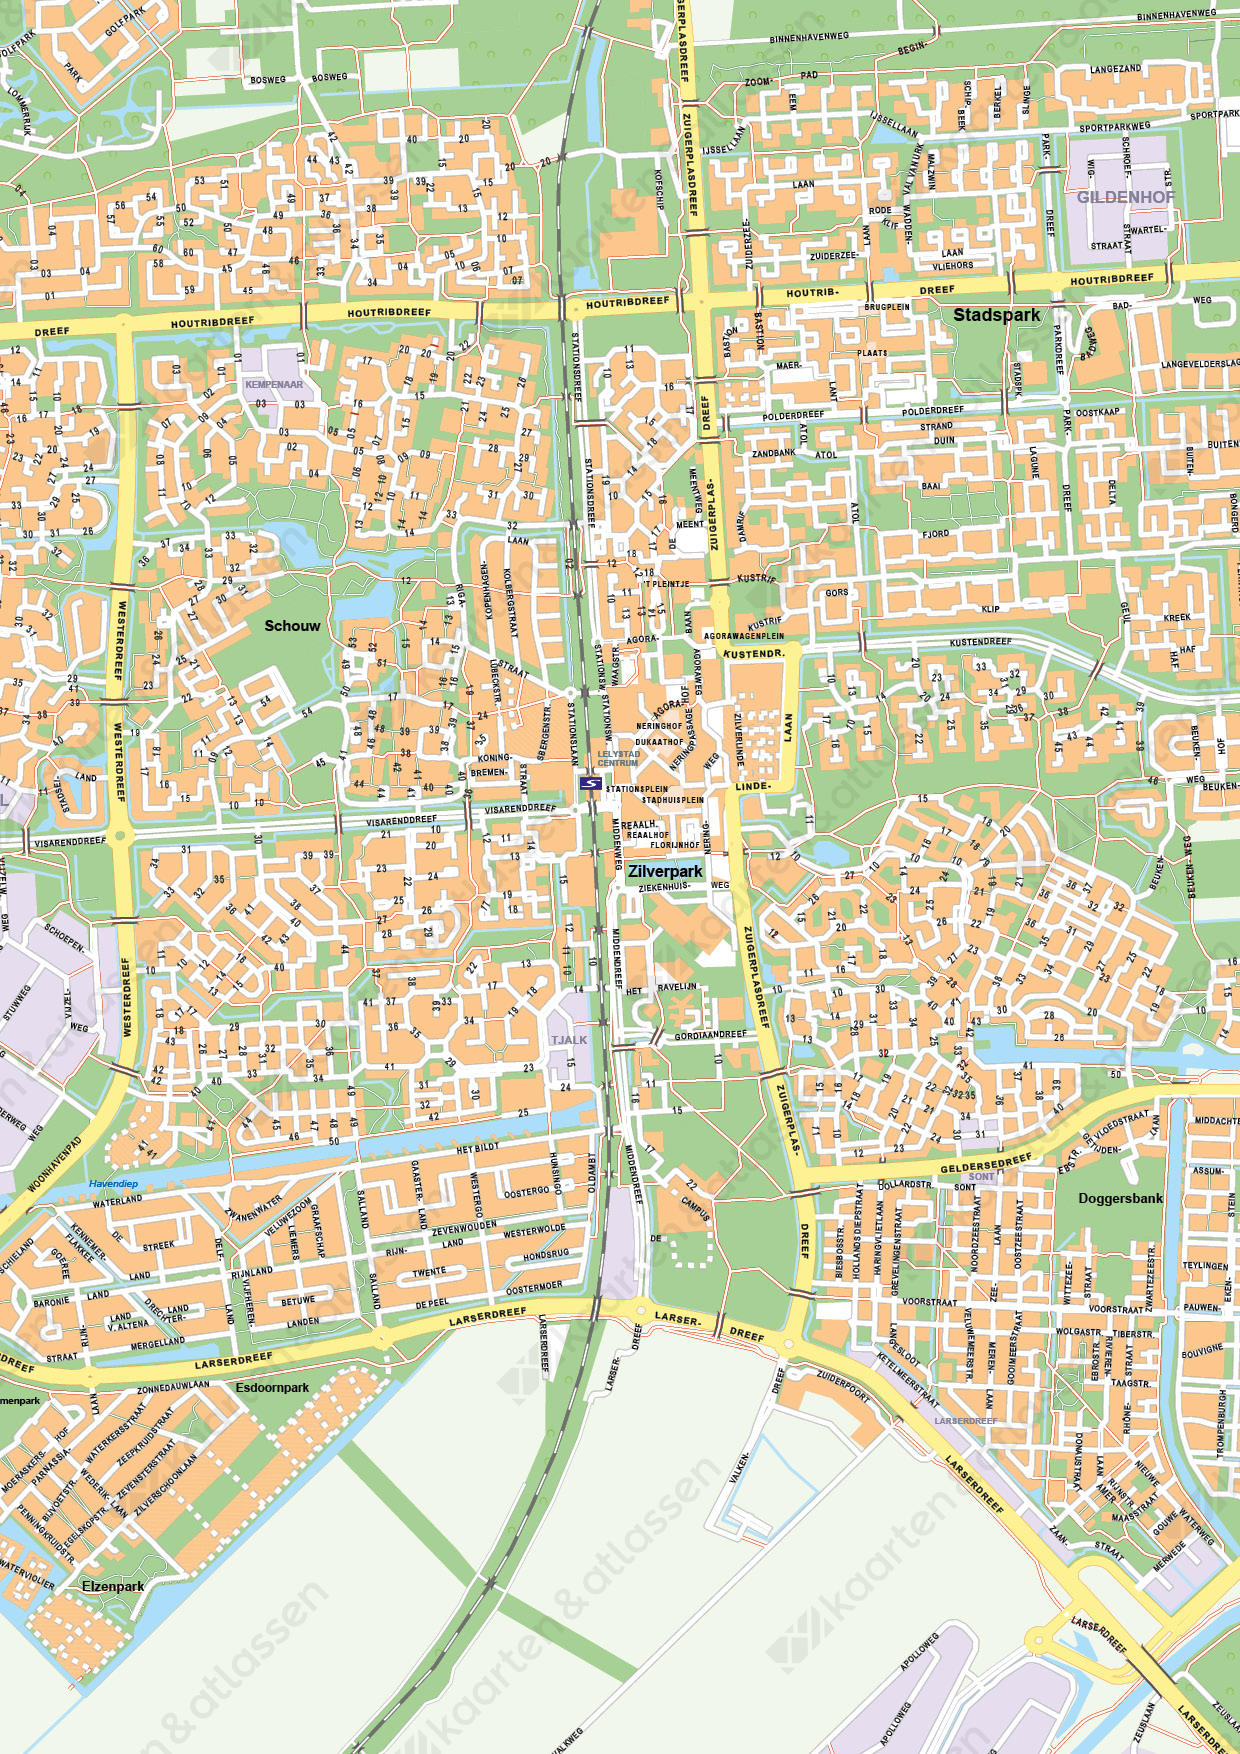 Digitale Kaart Lelystad 